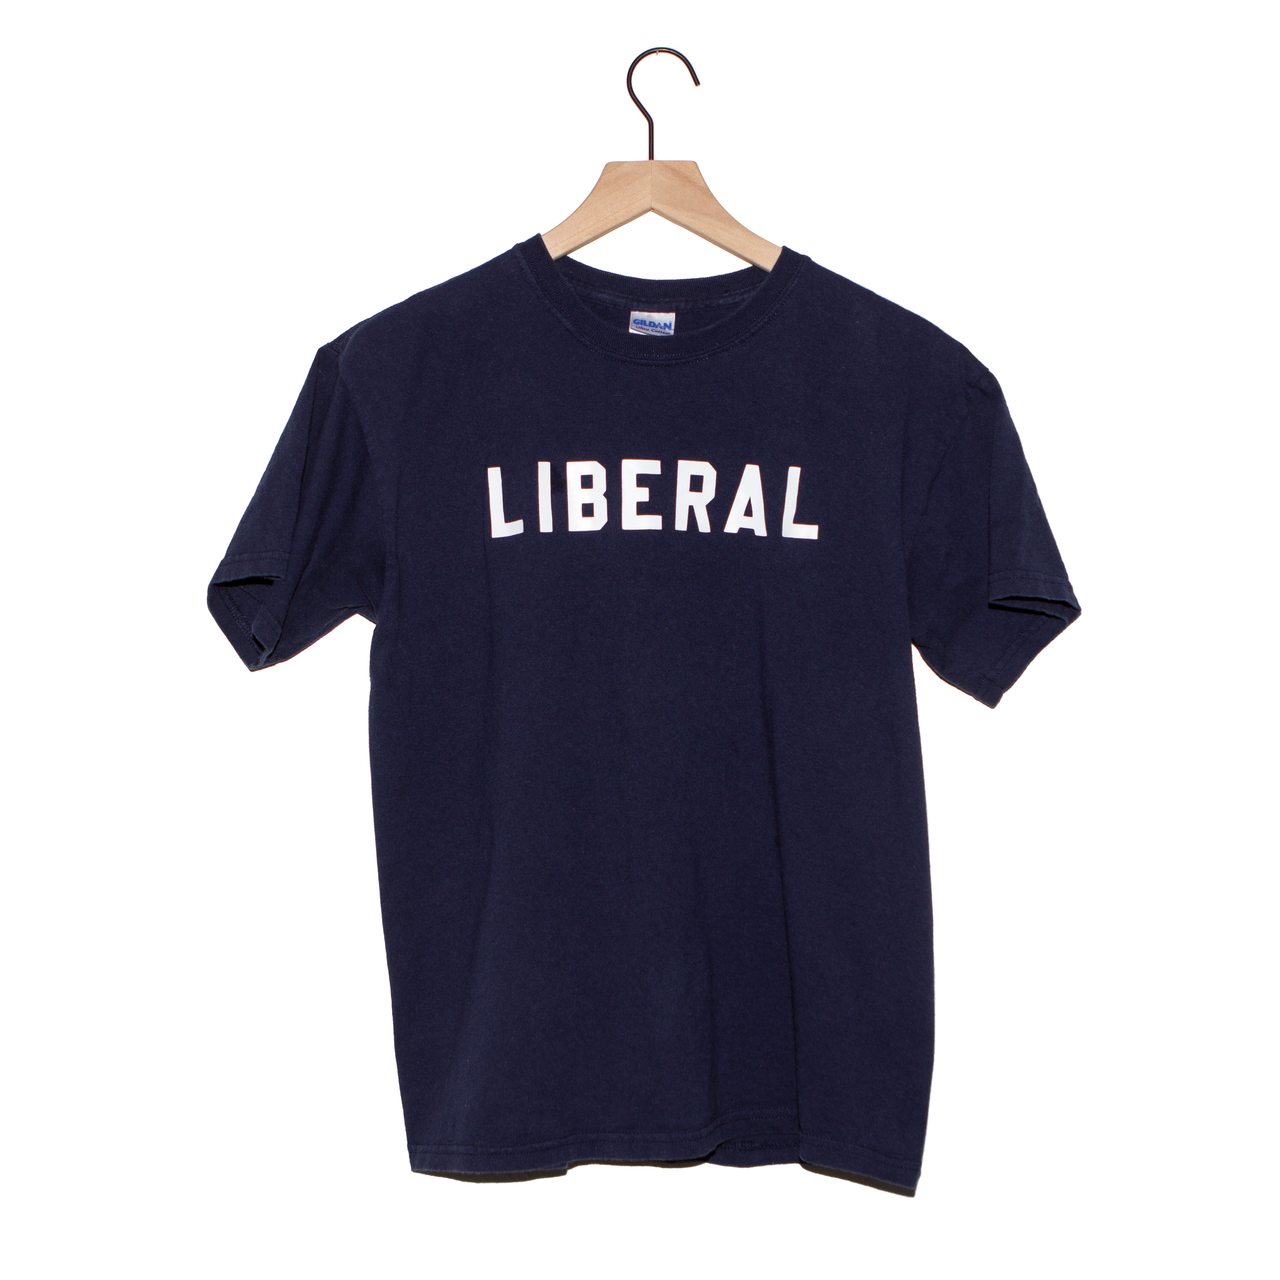 Liberal Shirt